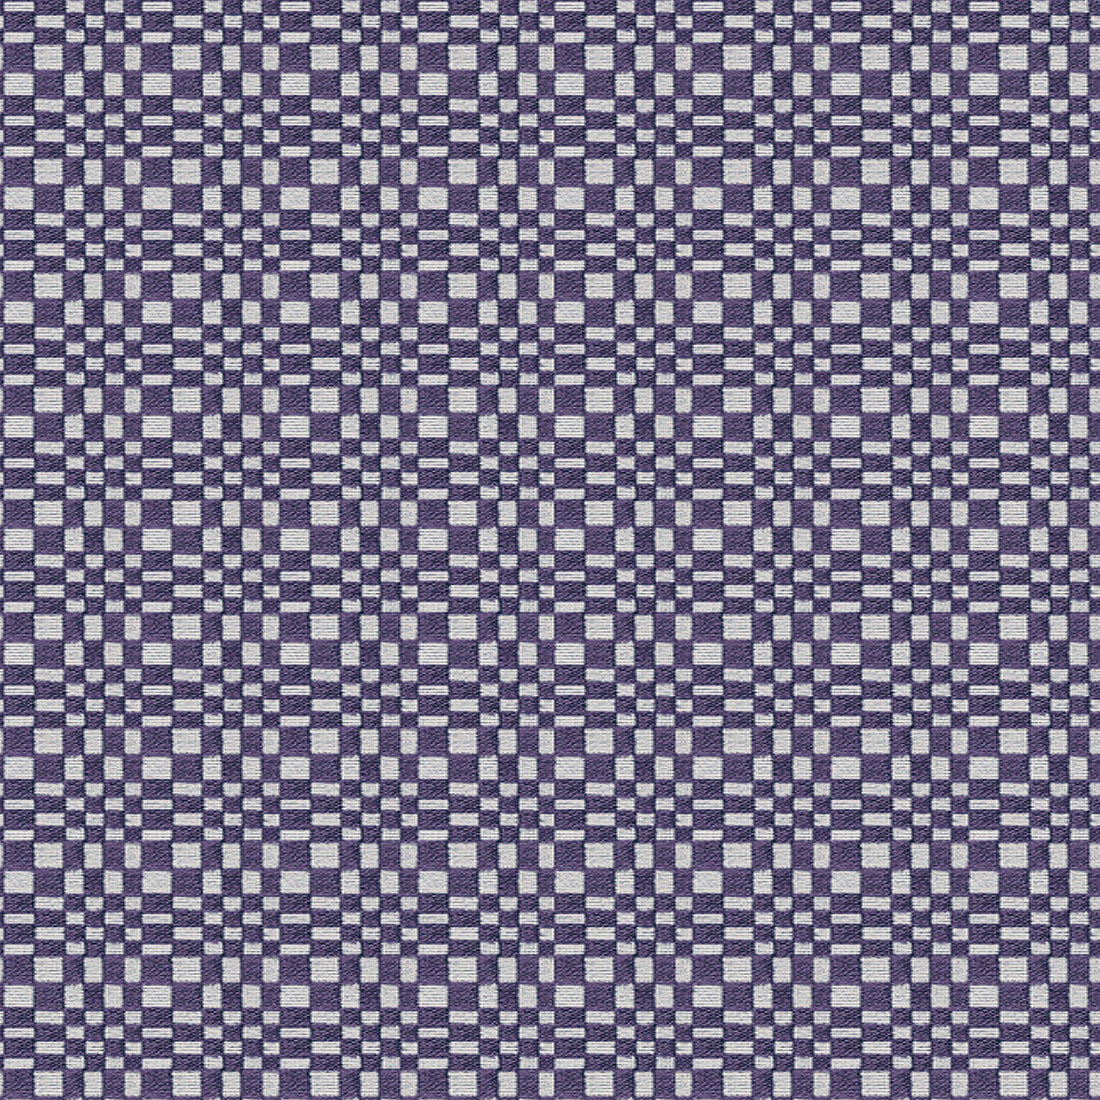 Santa Eulalia fabric in violeta color - pattern GDT5686.010.0 - by Gaston y Daniela in the Gaston Maiorica collection